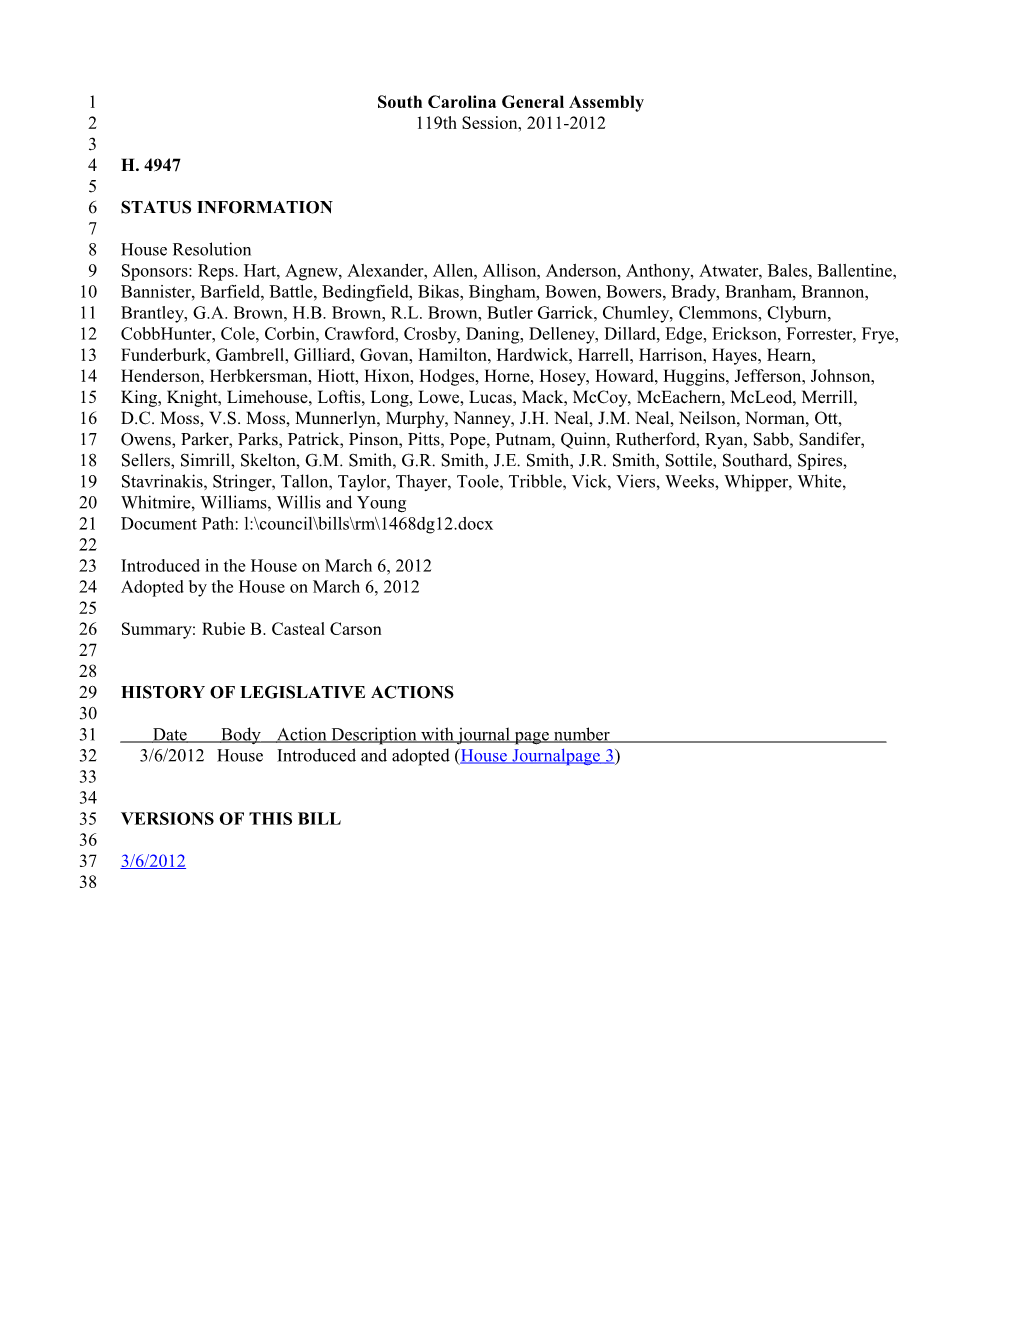 2011-2012 Bill 4947: Rubie B. Casteal Carson - South Carolina Legislature Online